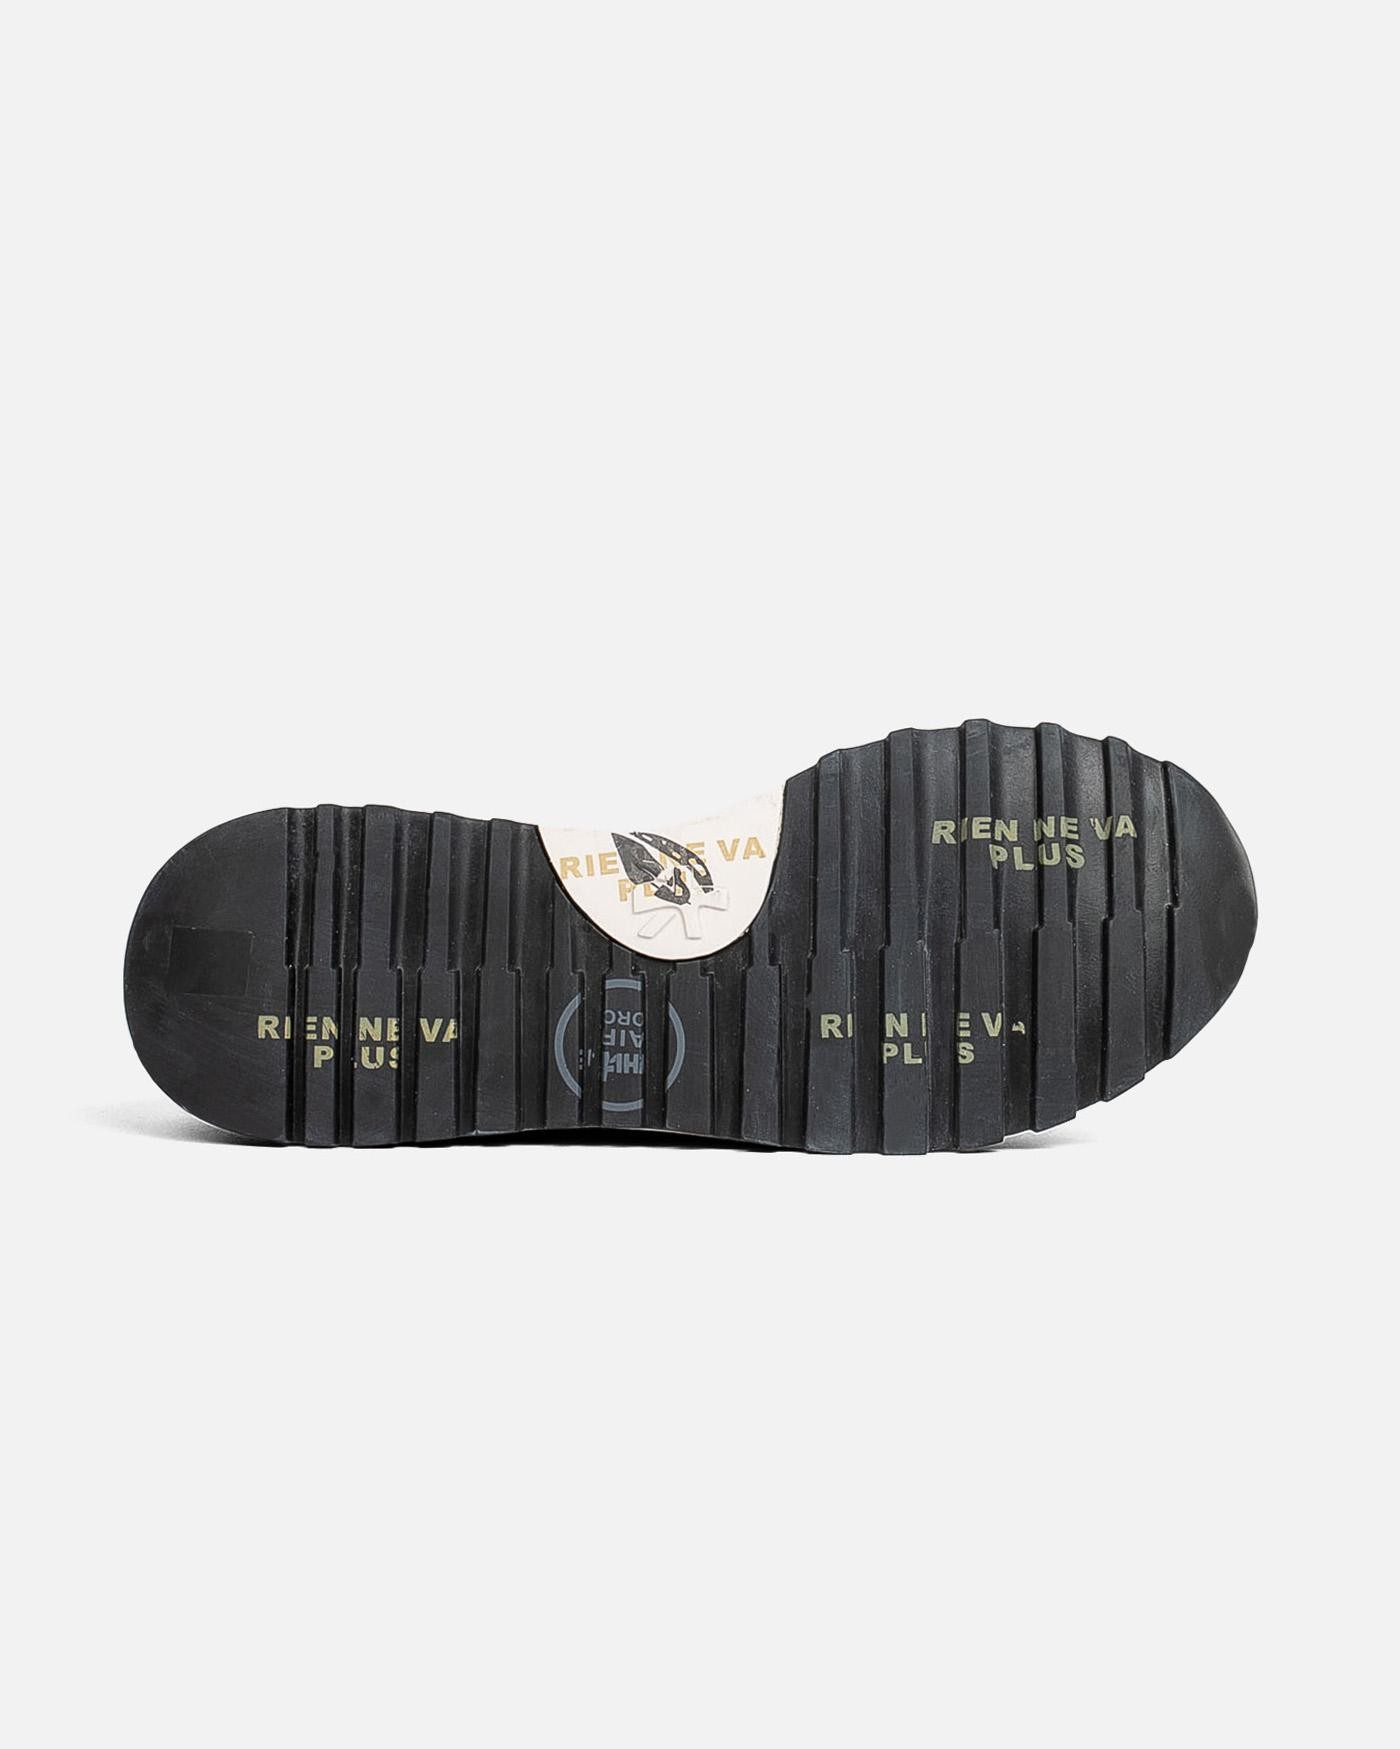 premiata-zapatillas-mick-var-6413-sneakers-grey-grises-3